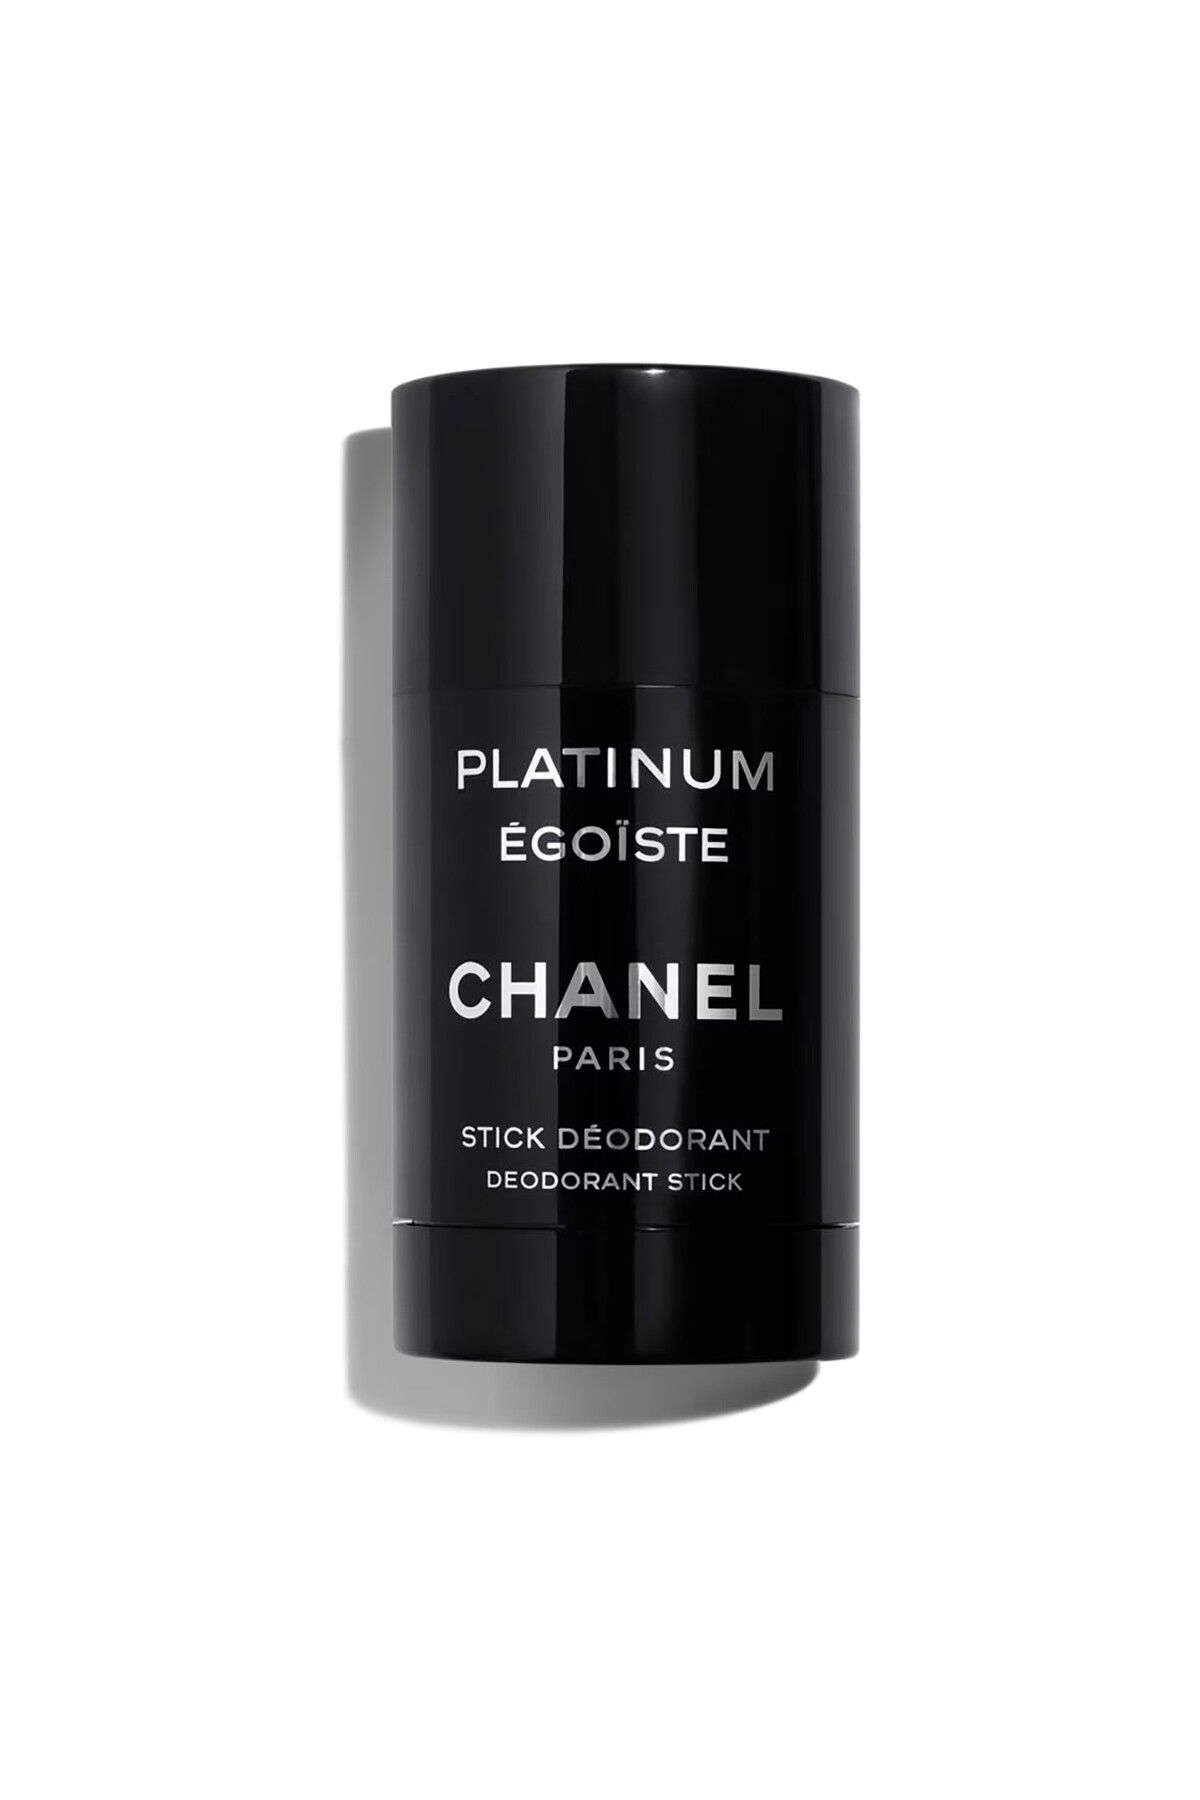 Chanel PLATINUM ÉGOÏSTE Stick - Erkekler İçin PLATINUM ÉGOÏSTE'in Fougère-vert Akordunu İçeren Stick 75 ml